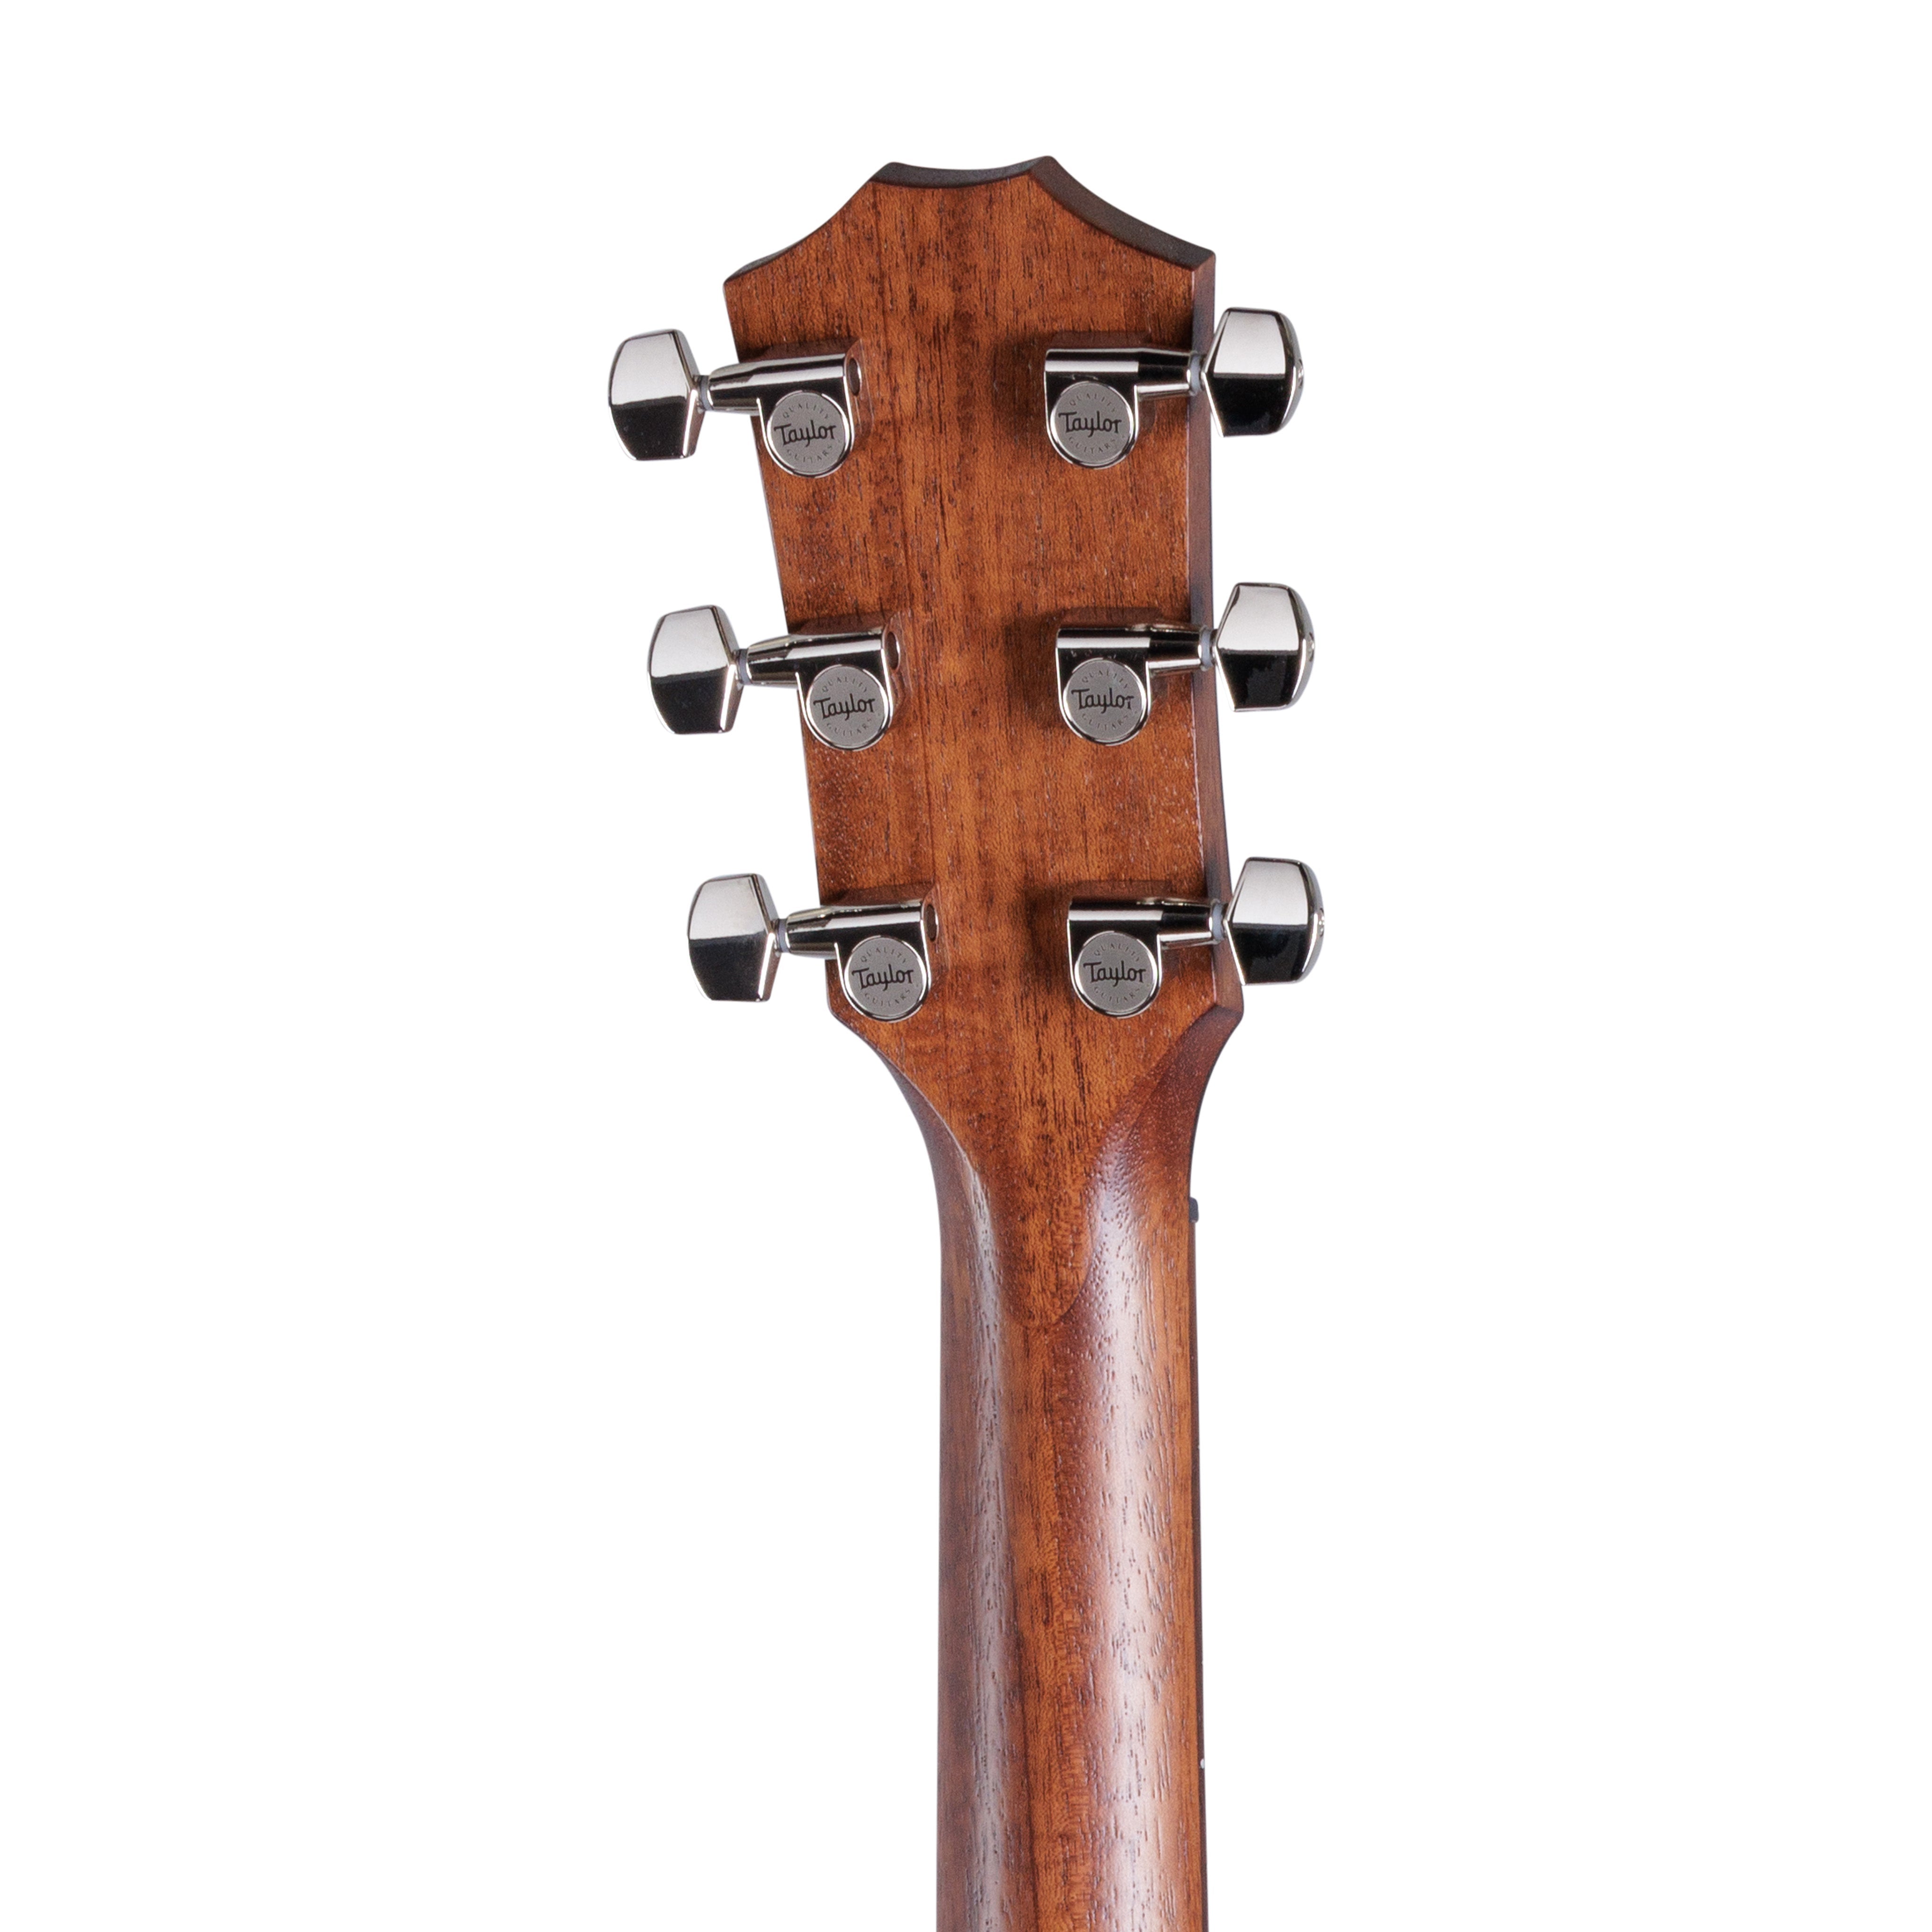 Taylor AD26e Baritone-6 Special Edition Grand Symphony Acoustic Guitar w/Bag, Shaded Edge Burst